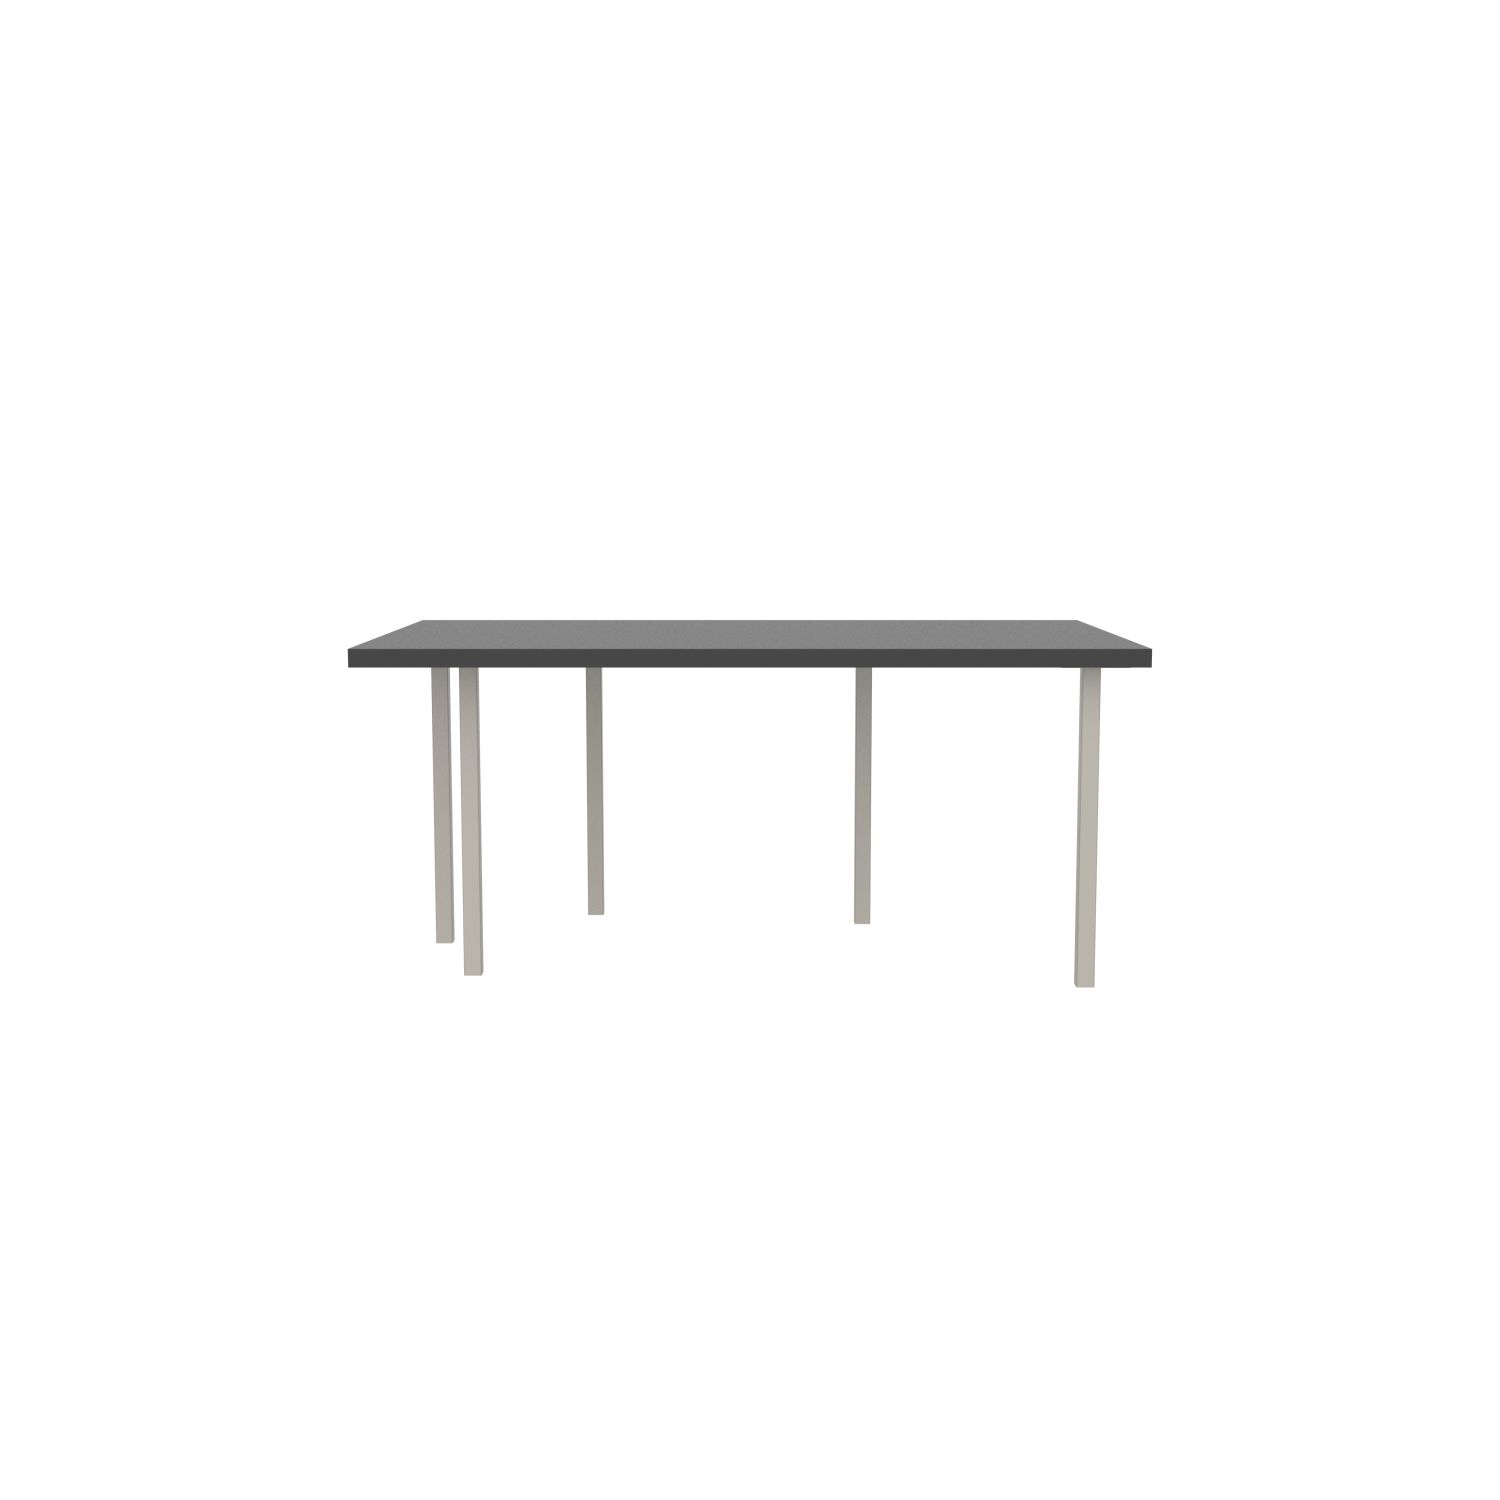 lensvelt bbrand table five fixed heigt 103x172 hpl black 50 mm price level 1 boring grey ral7044